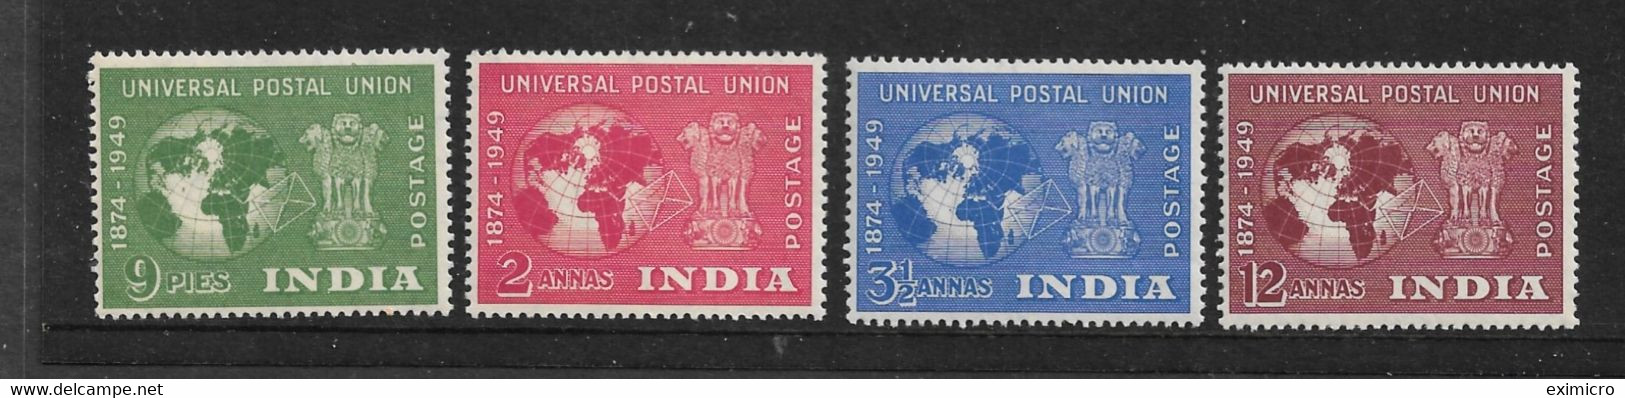 INDIA 1949 UPU SET SG 325/328 LIGHTLY MOUNTED MINT Cat £32 - Unused Stamps